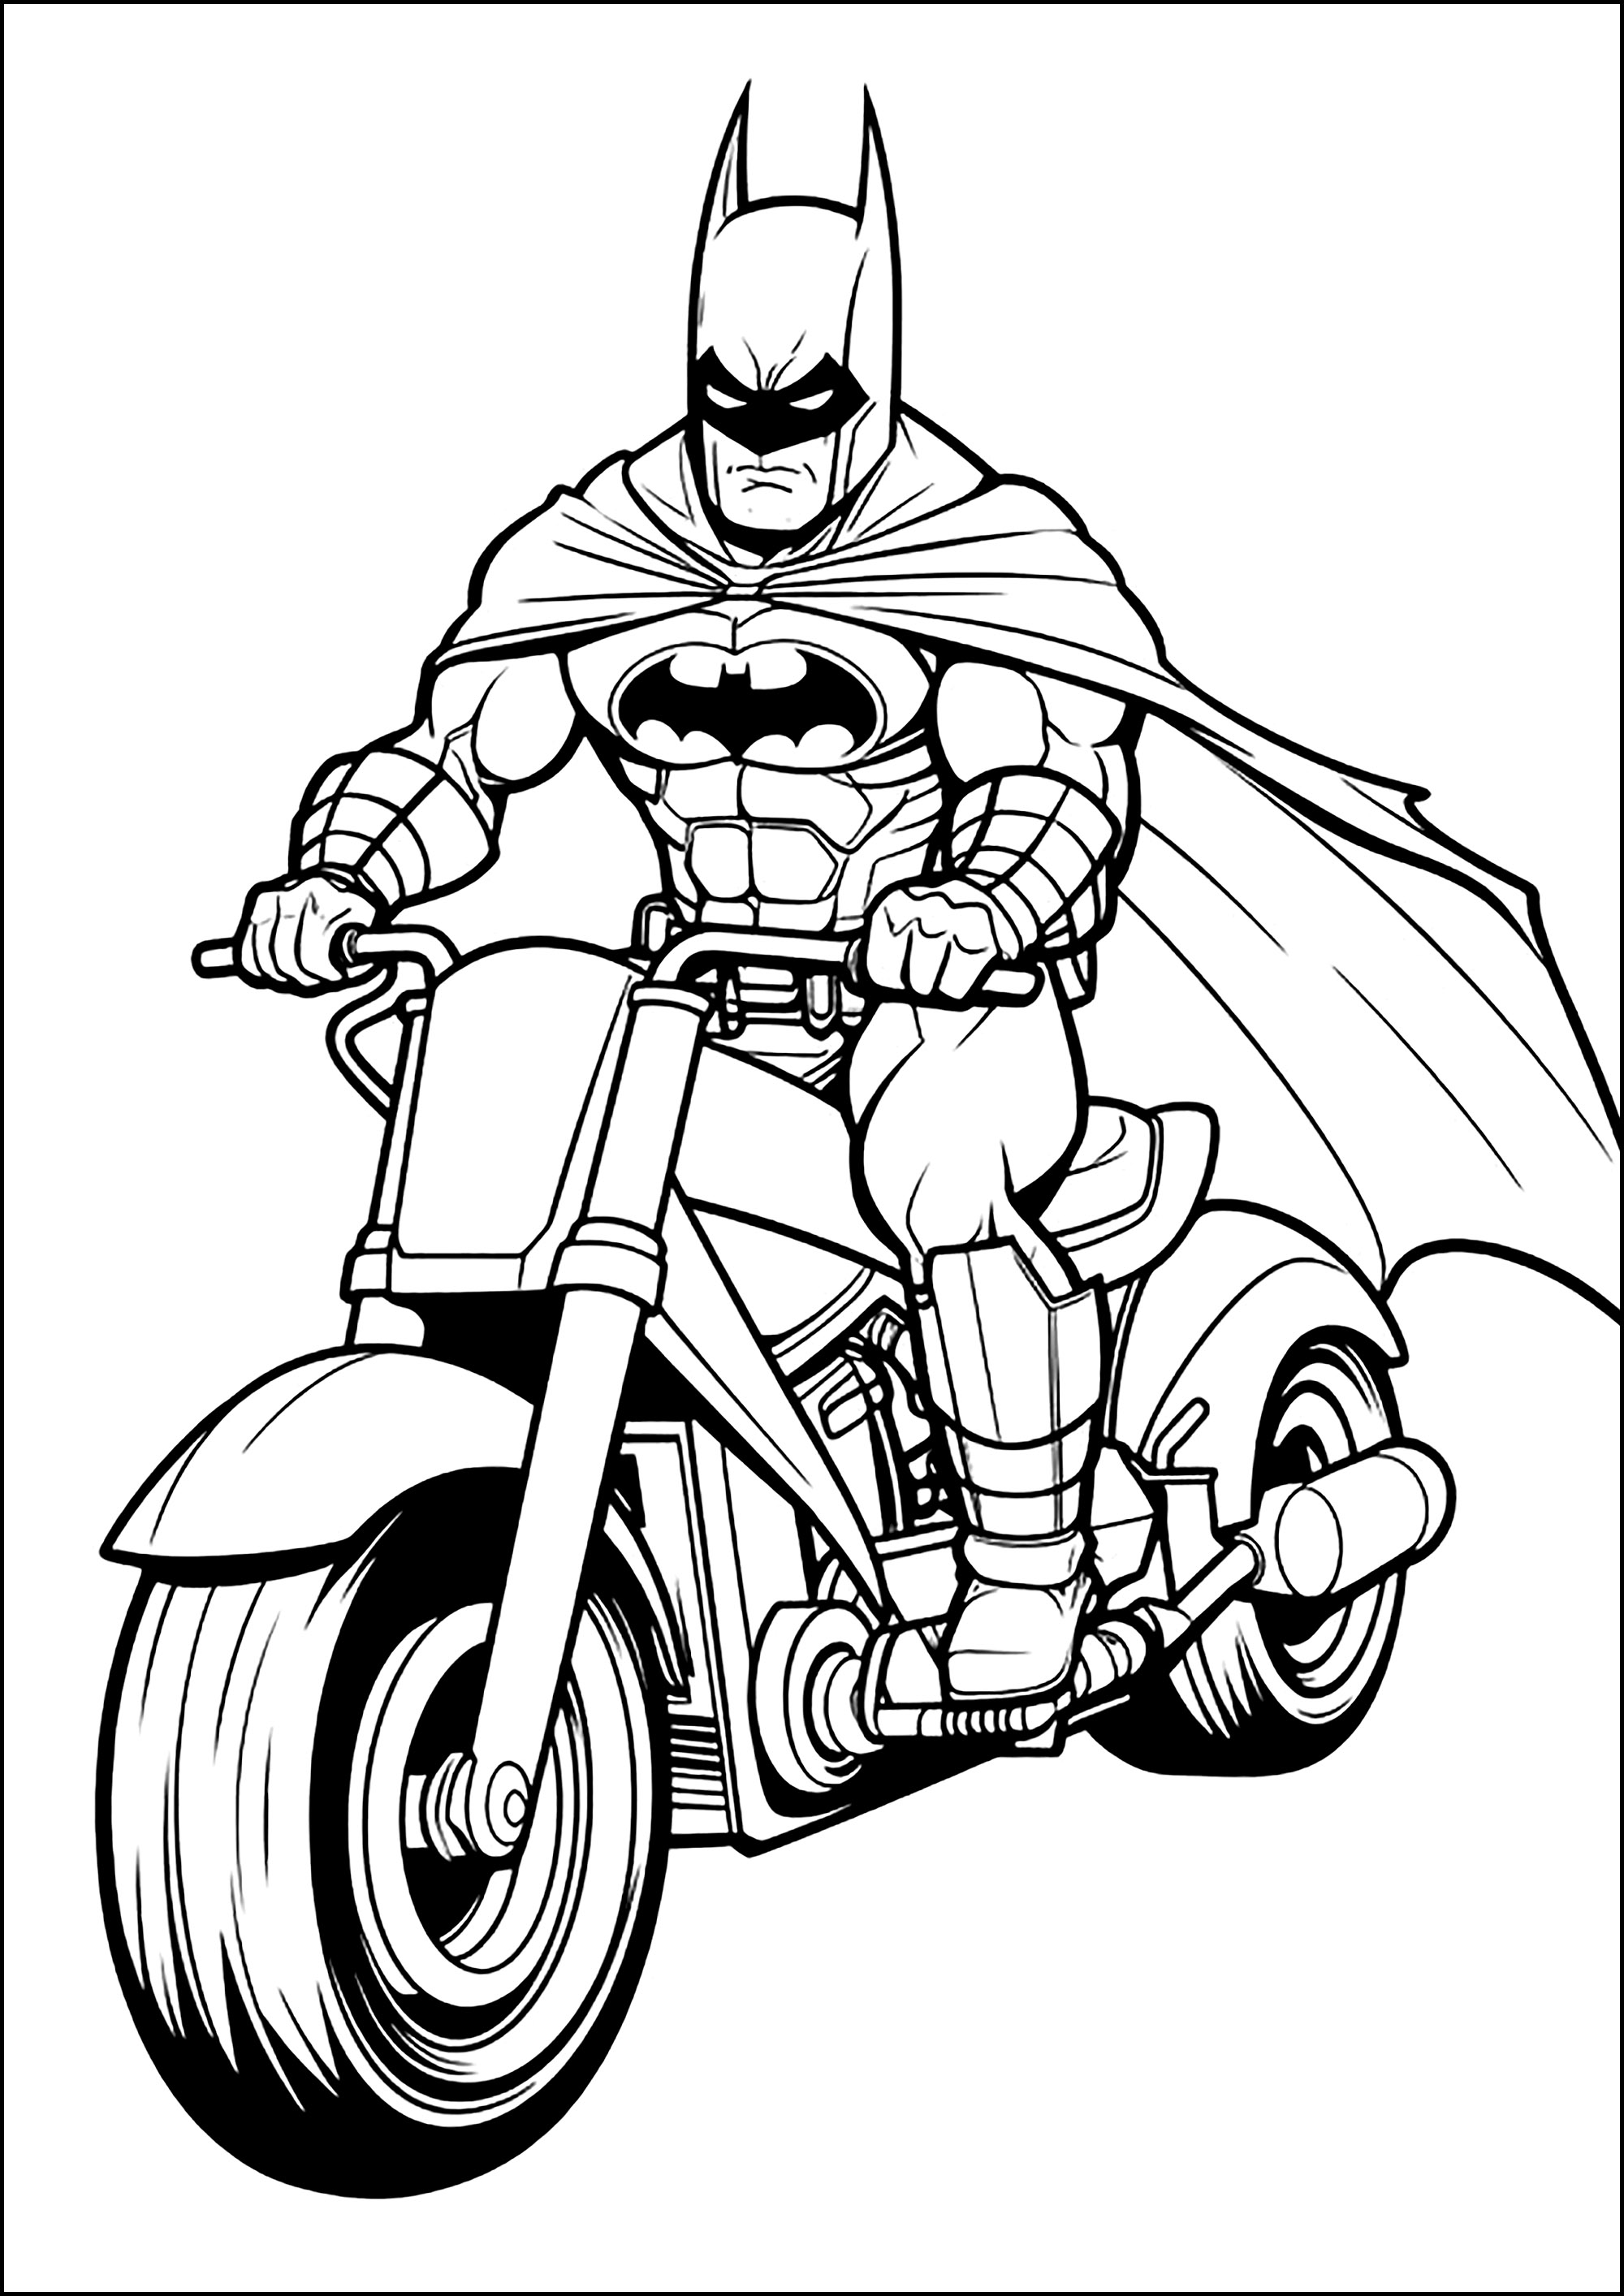 Batman on his motorcycle - Batman Kids Coloring Pages